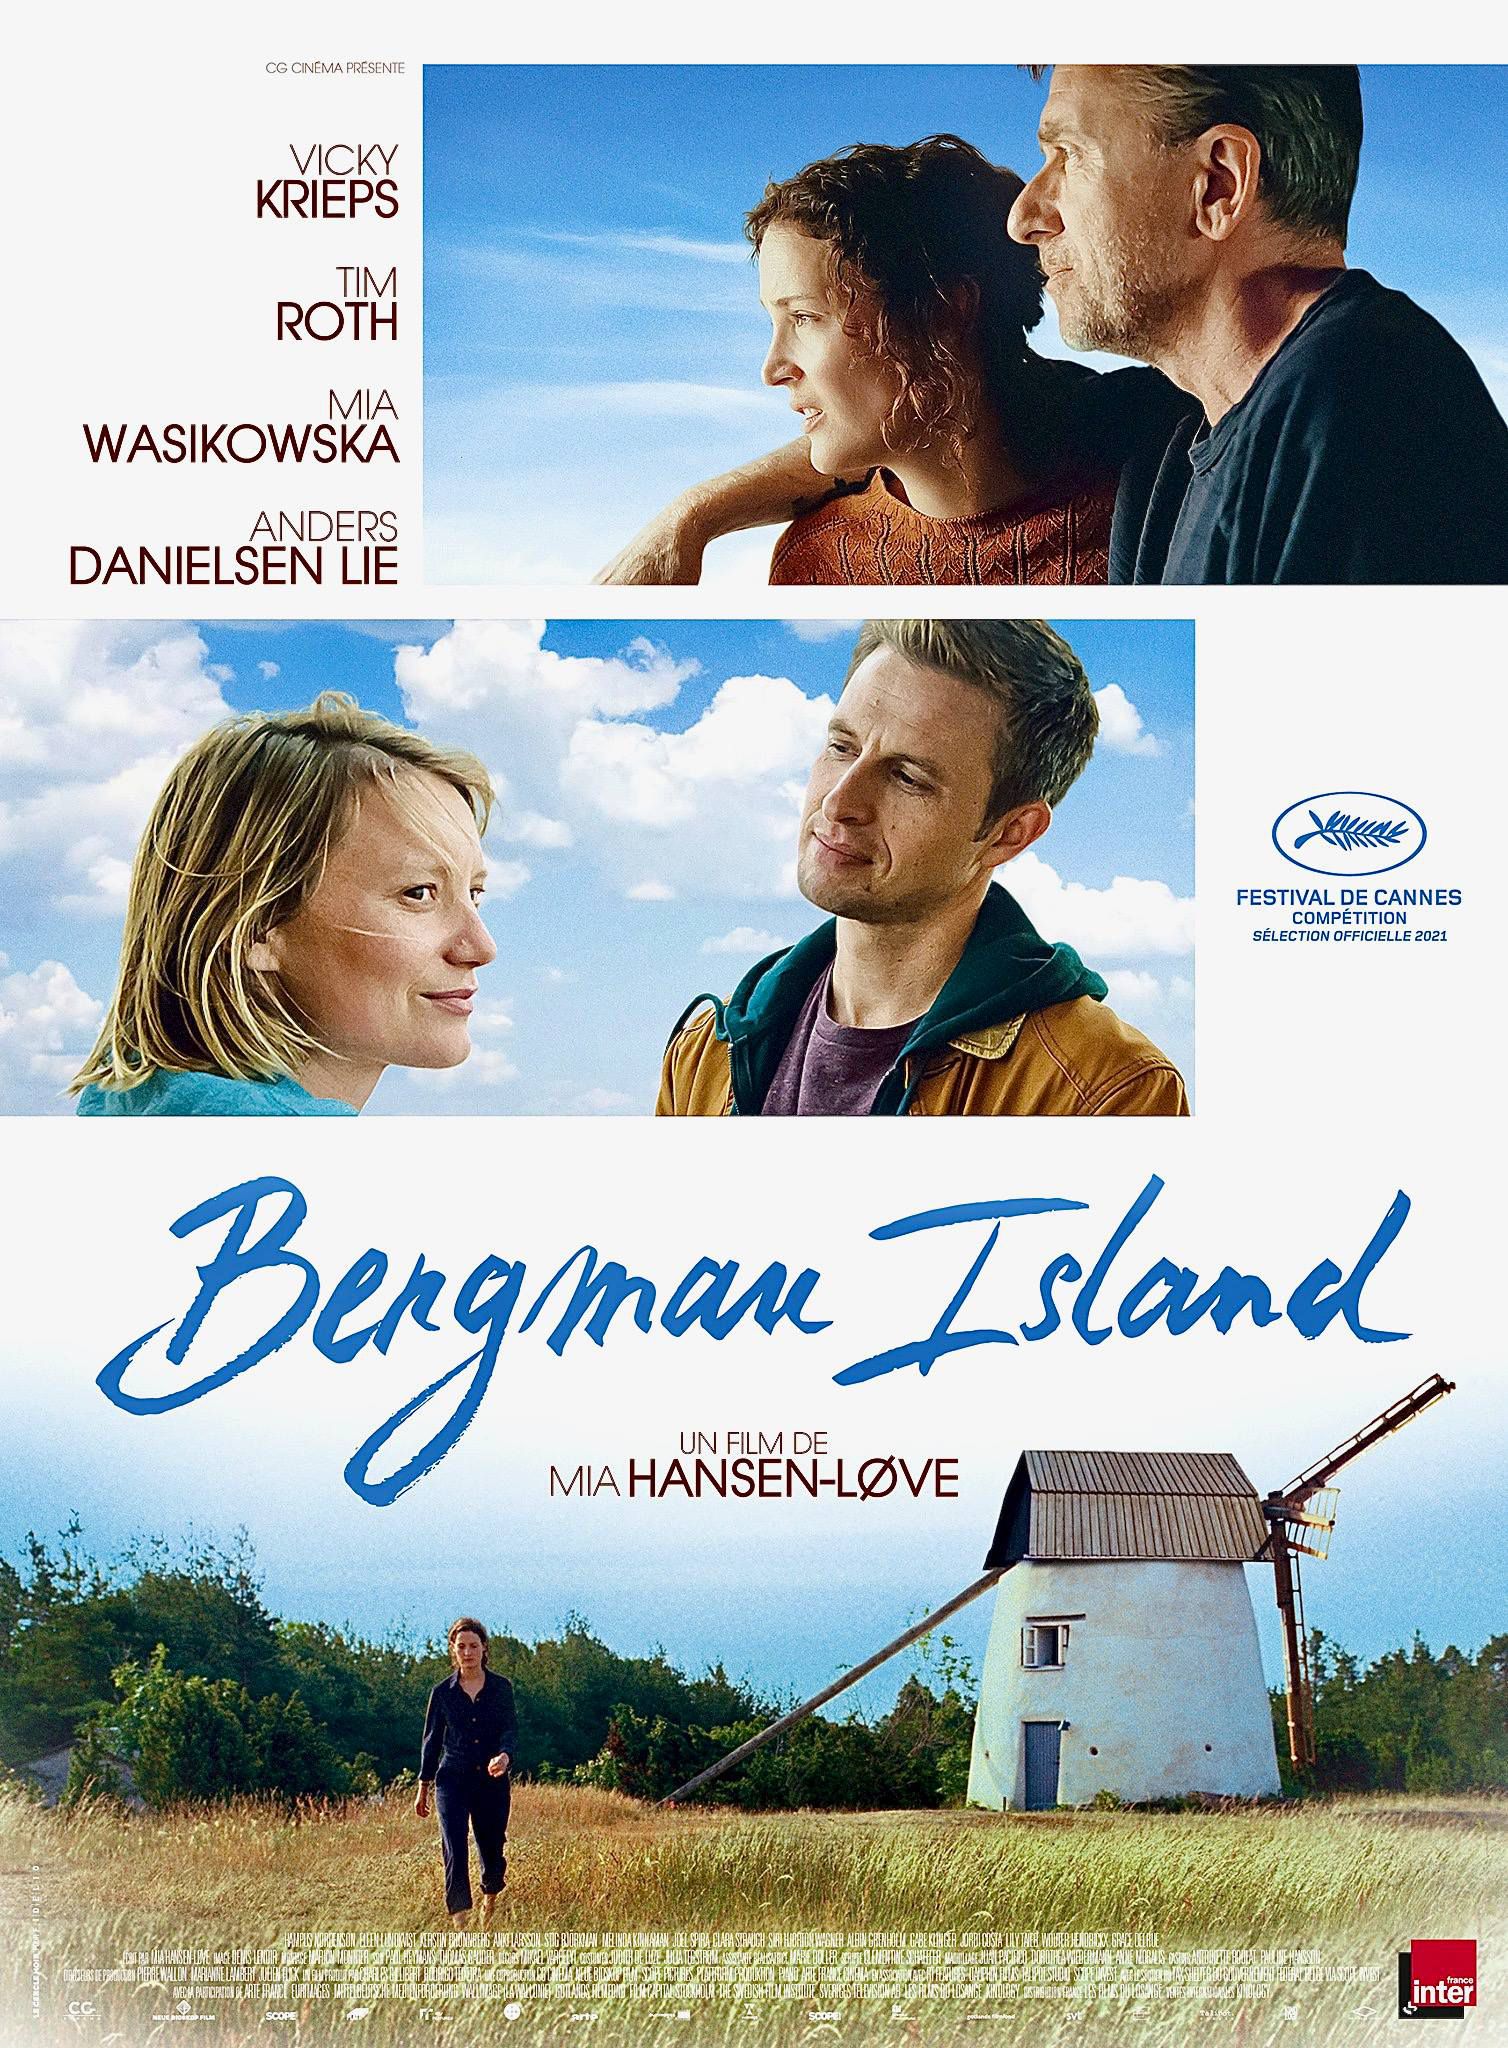 Voir Film Bergman Island - Film (2020) streaming VF gratuit complet